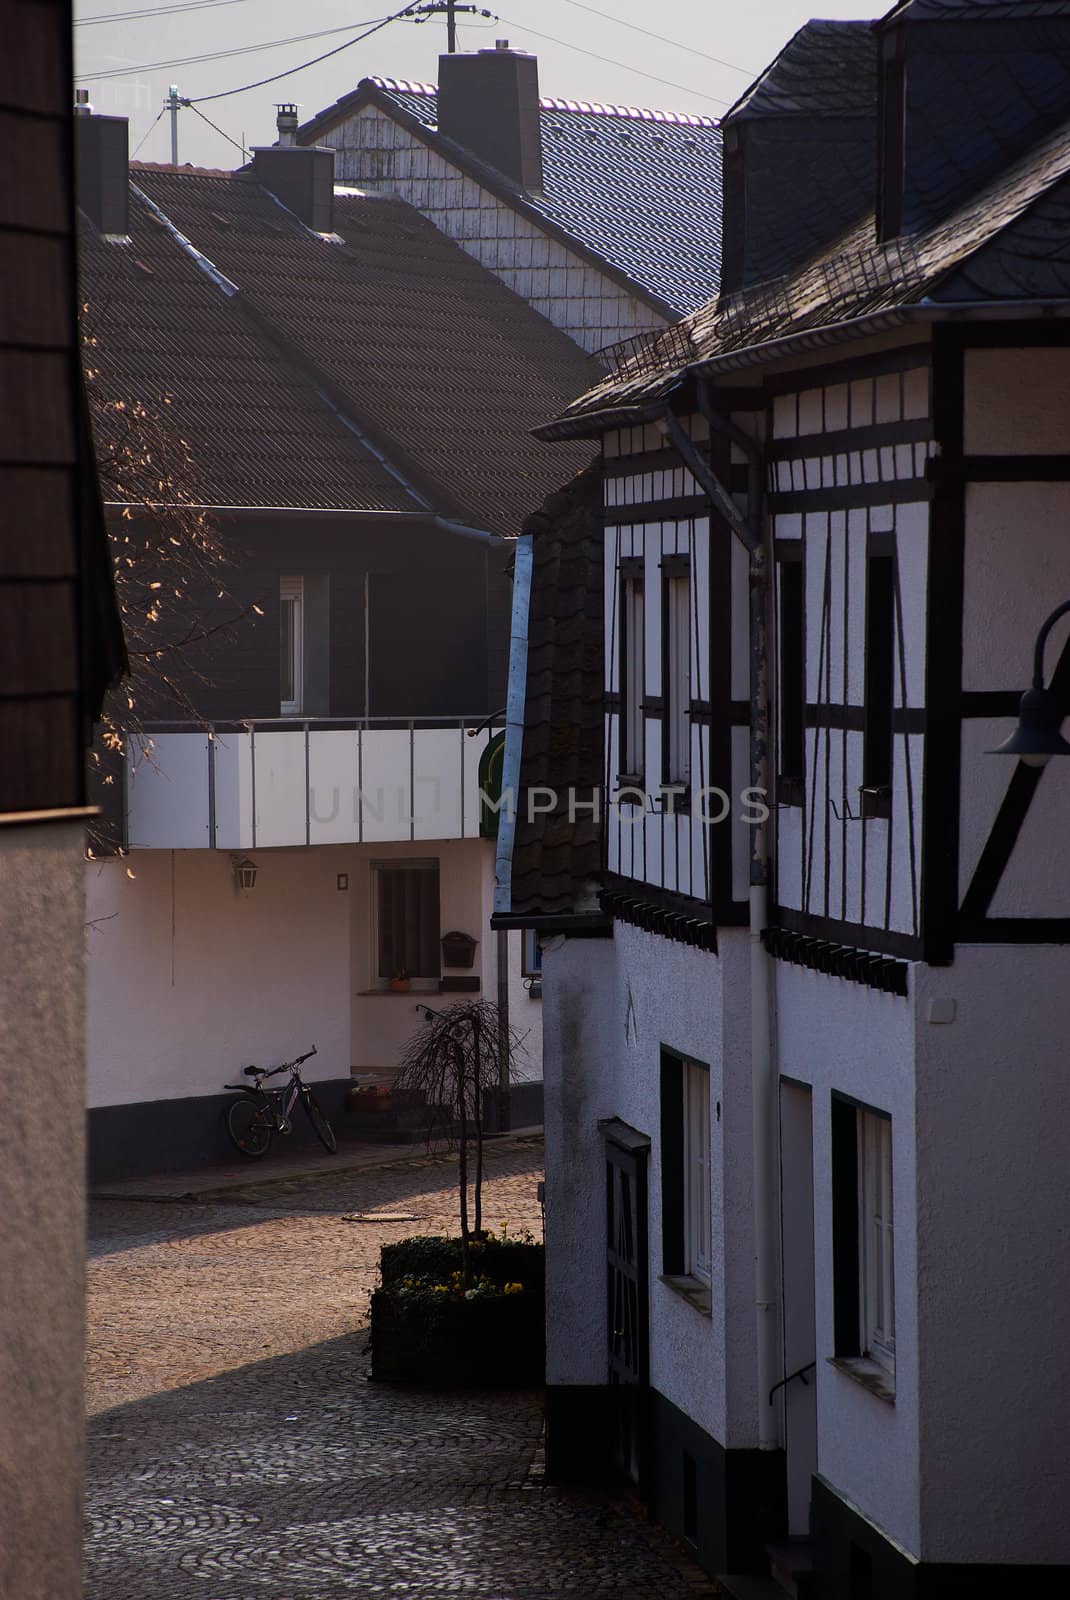 Morning, traditional German buildings, bike near the wall